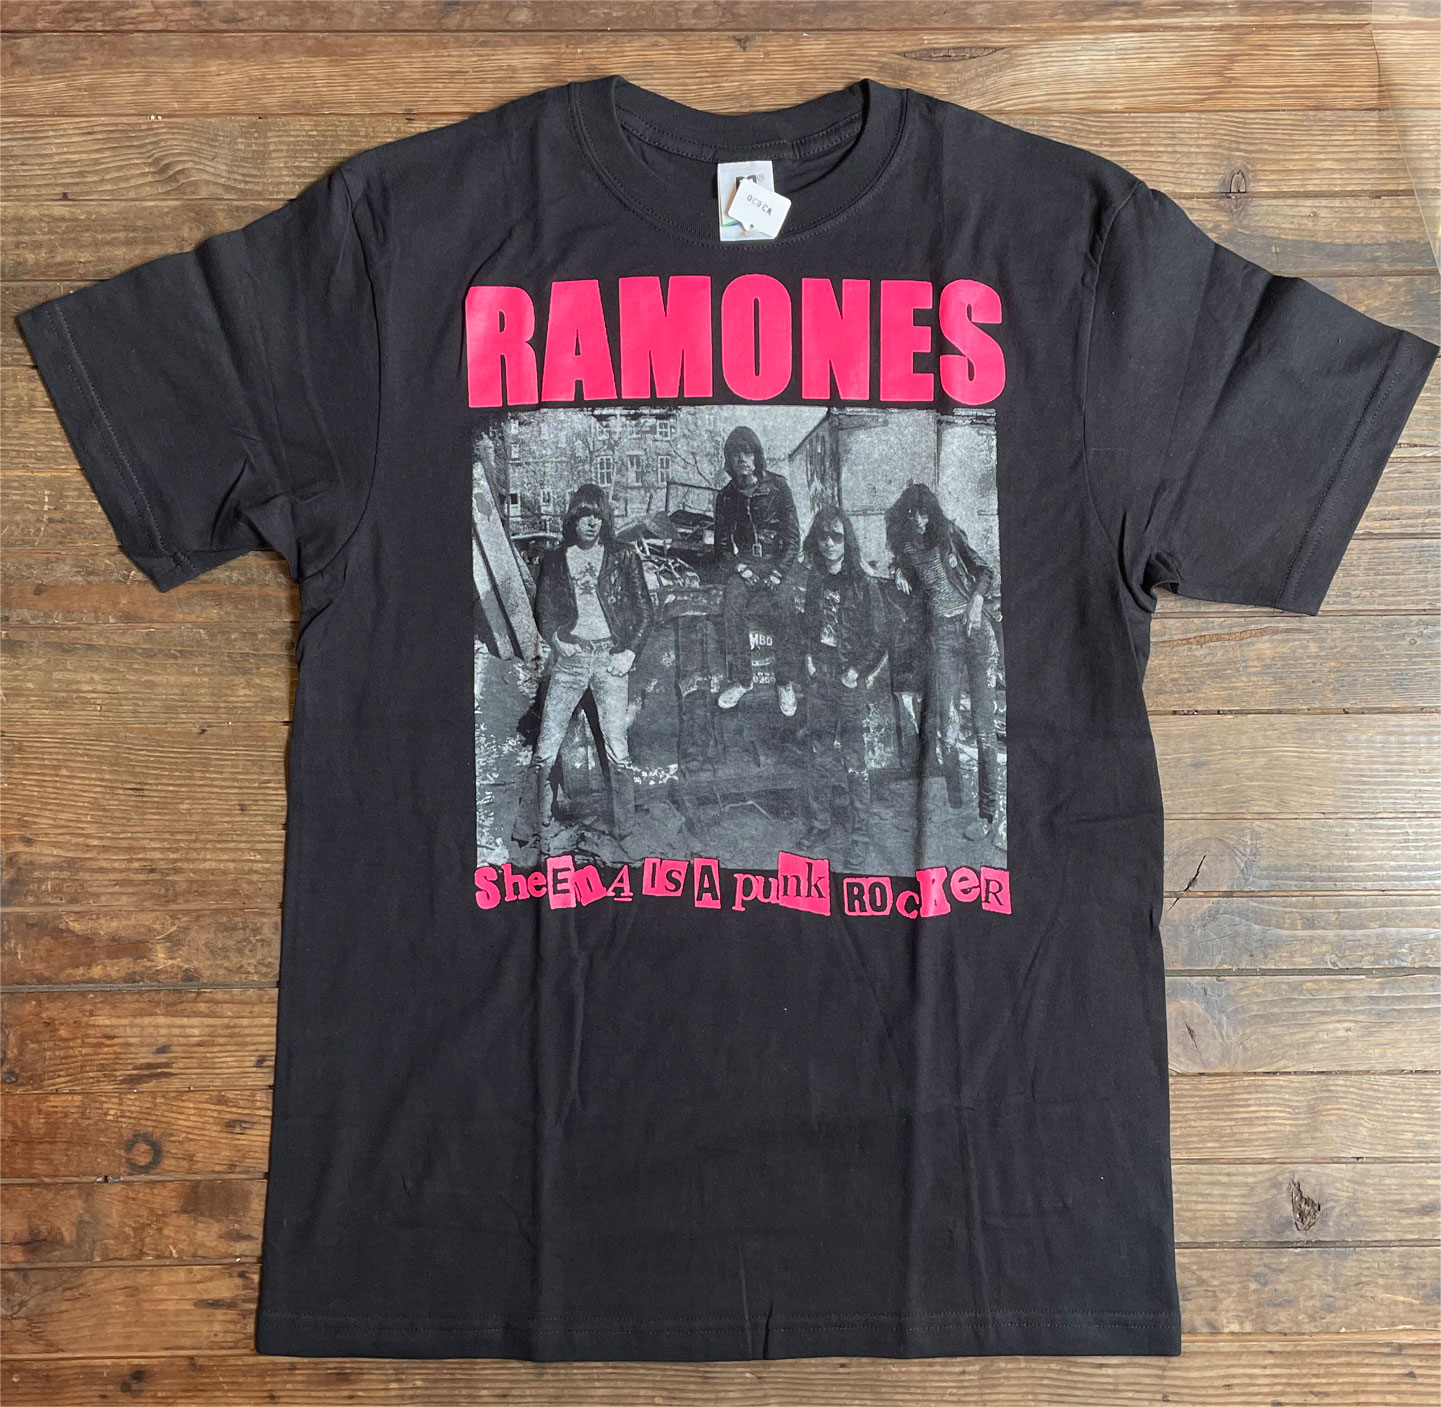 RAMONES Tシャツ SHEENA IS A PUNK ROCKER | 45REVOLUTION